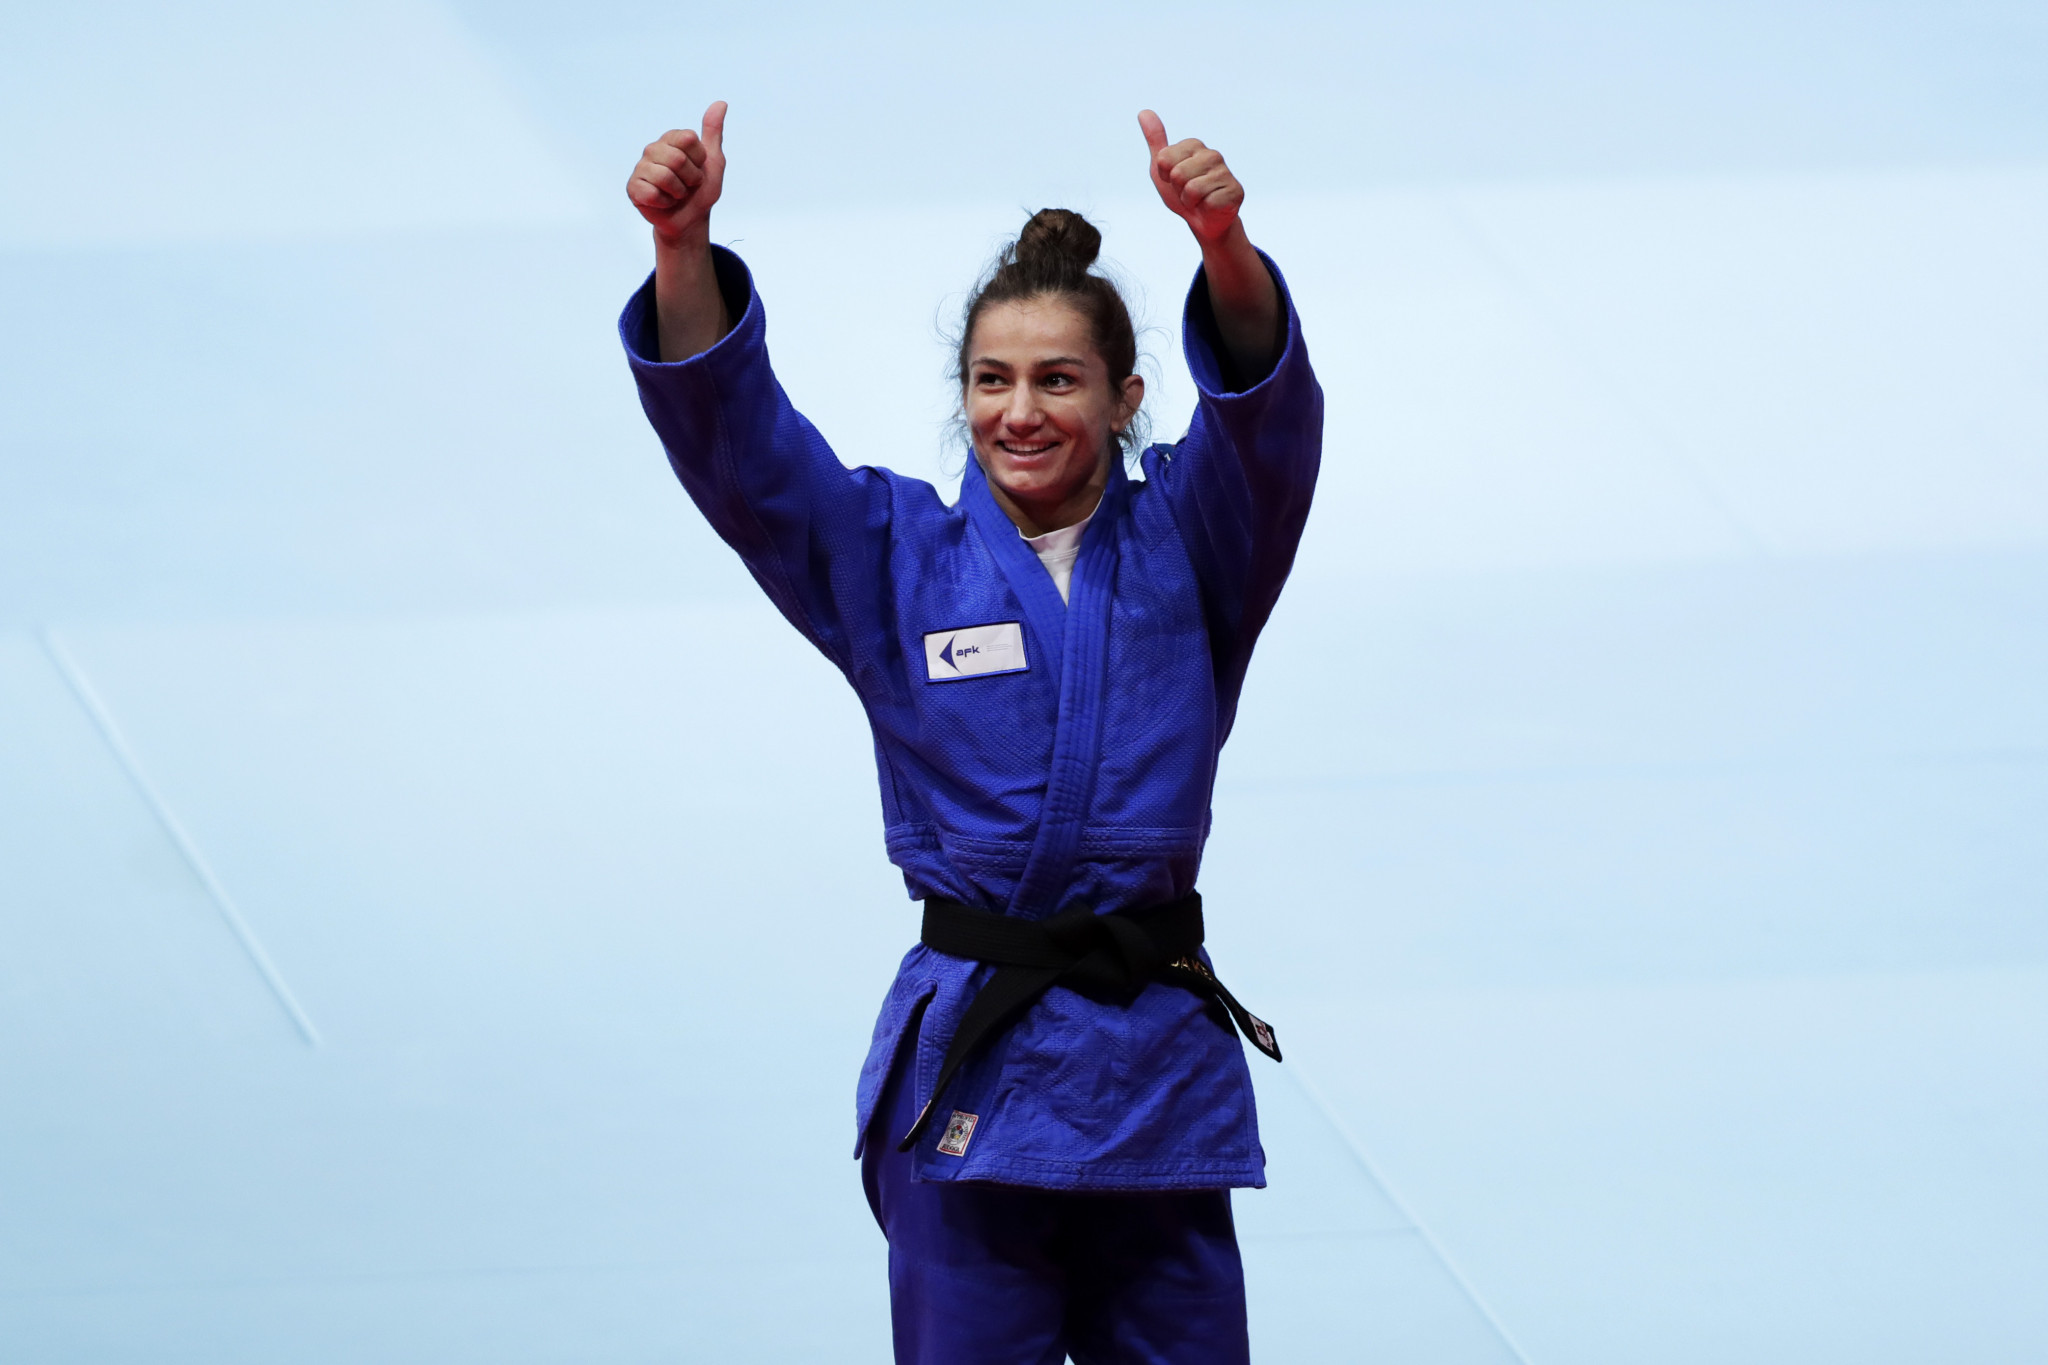 Kosovo's first Olympic gold medallist Majlinda Kelmendi retires from judo